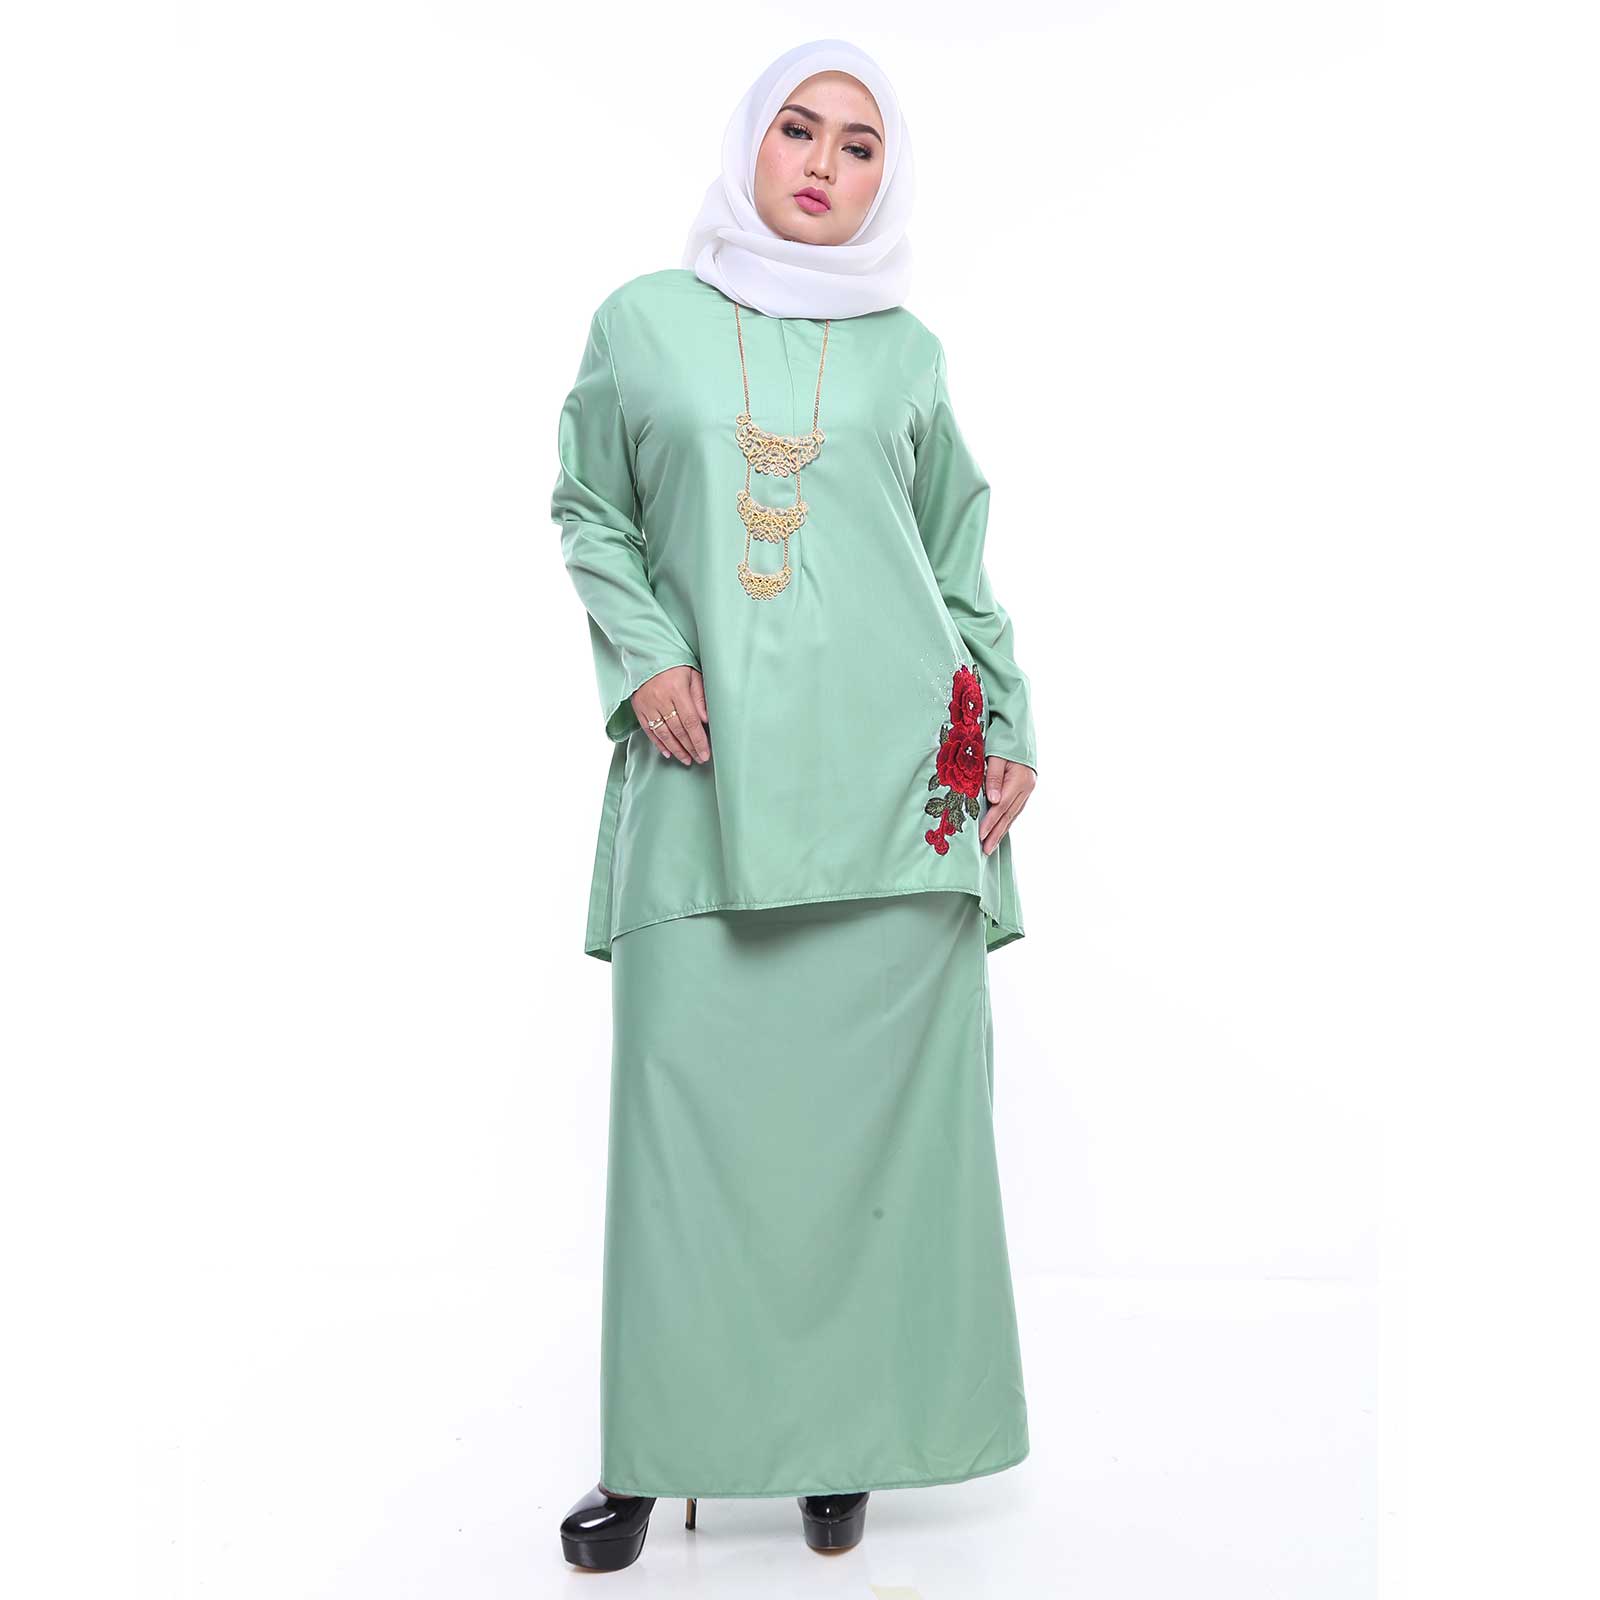 Nami Blossom kurung  modern  mint green Malaysia Baju  Plus  